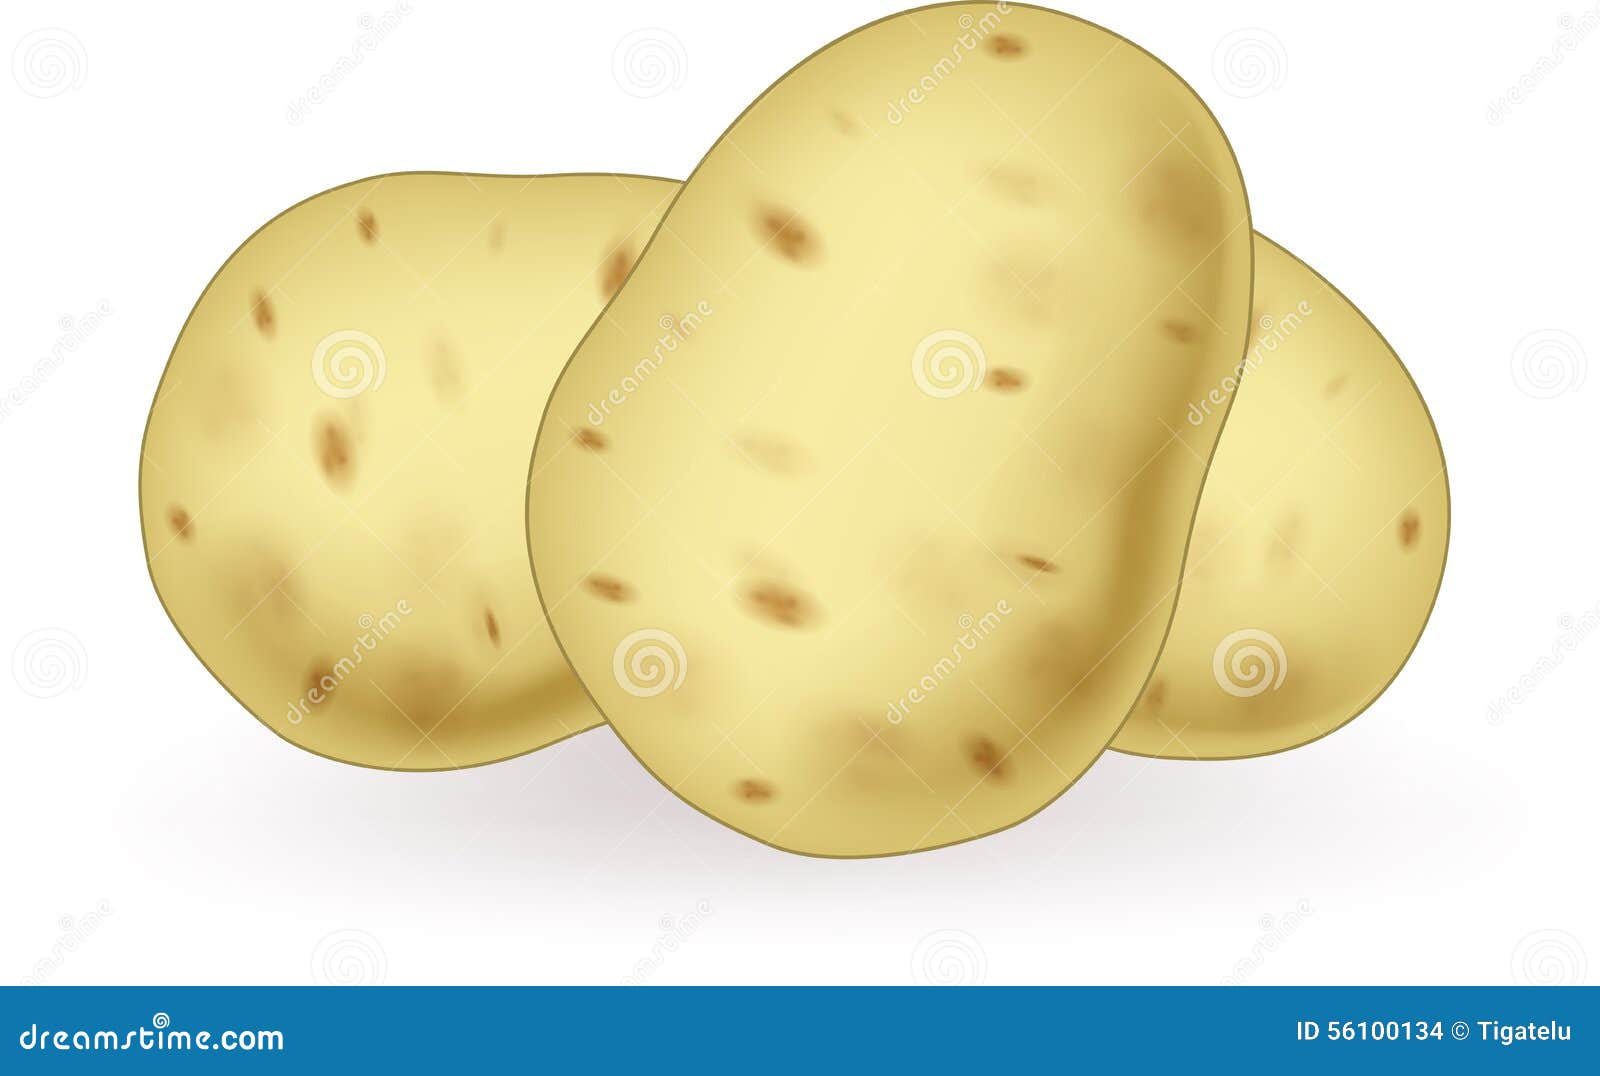 potato cartoon images